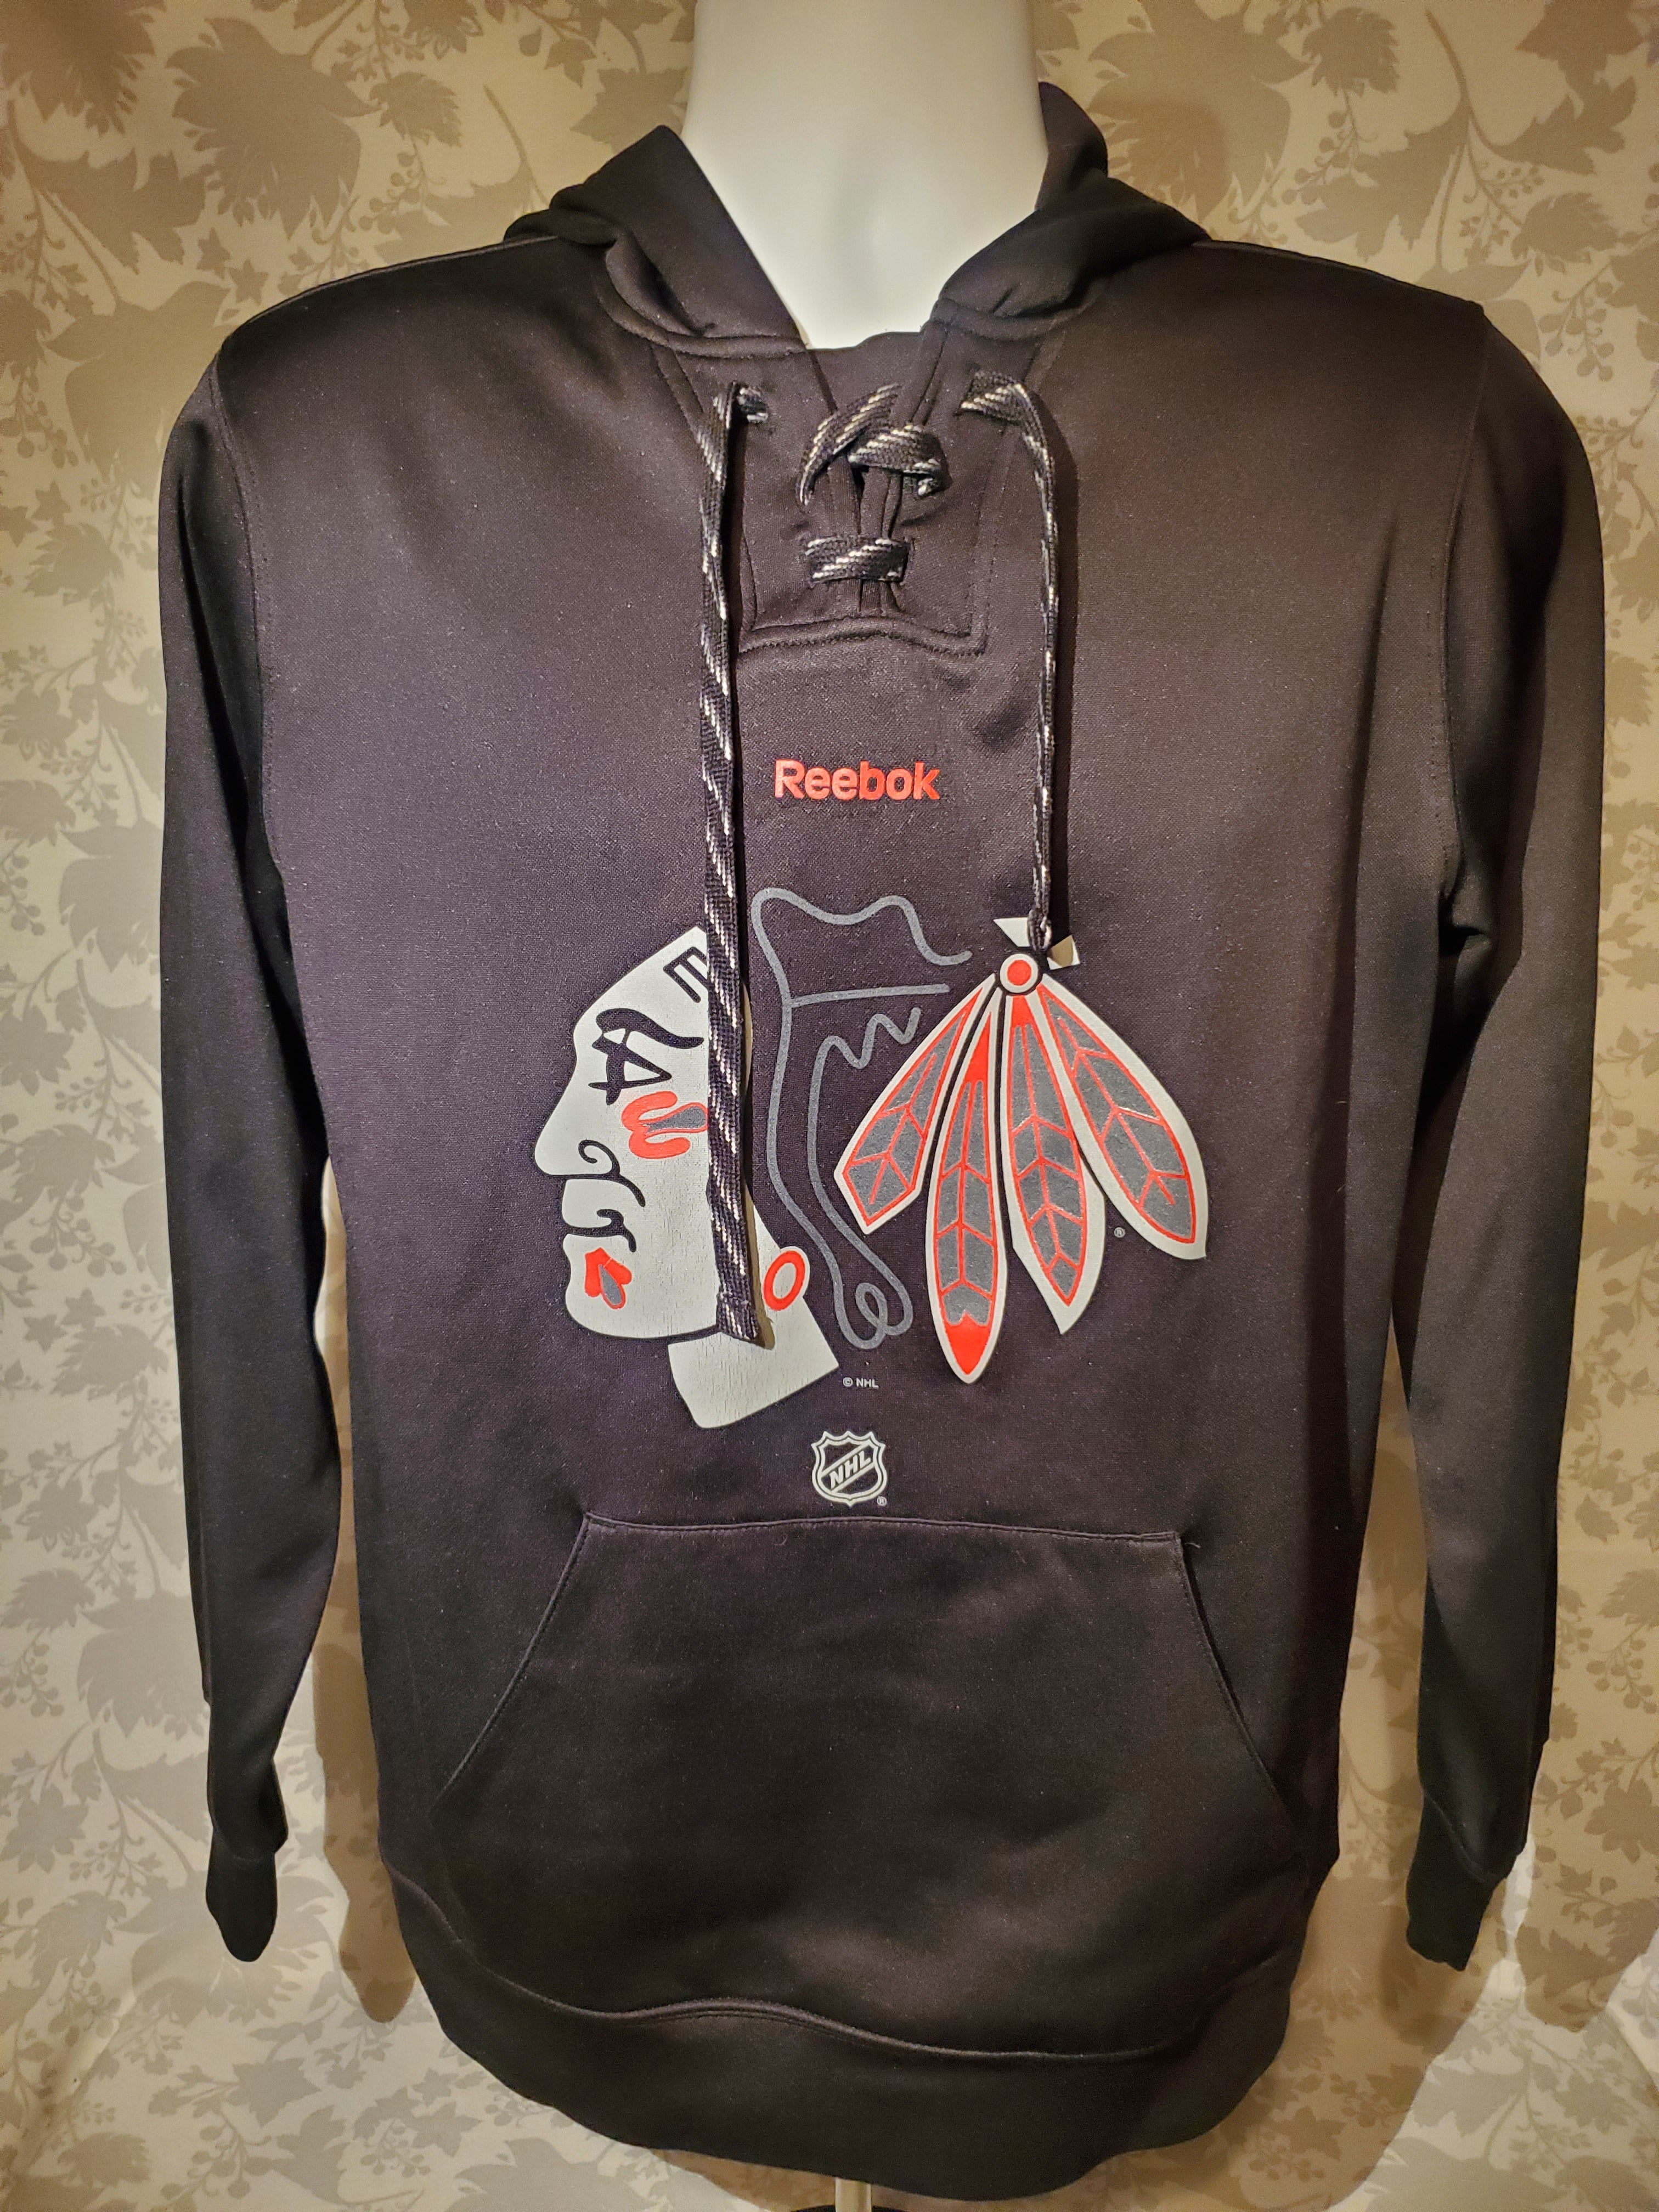 Chicago Blackhawks Sweatshirts & Hoodies for Sale